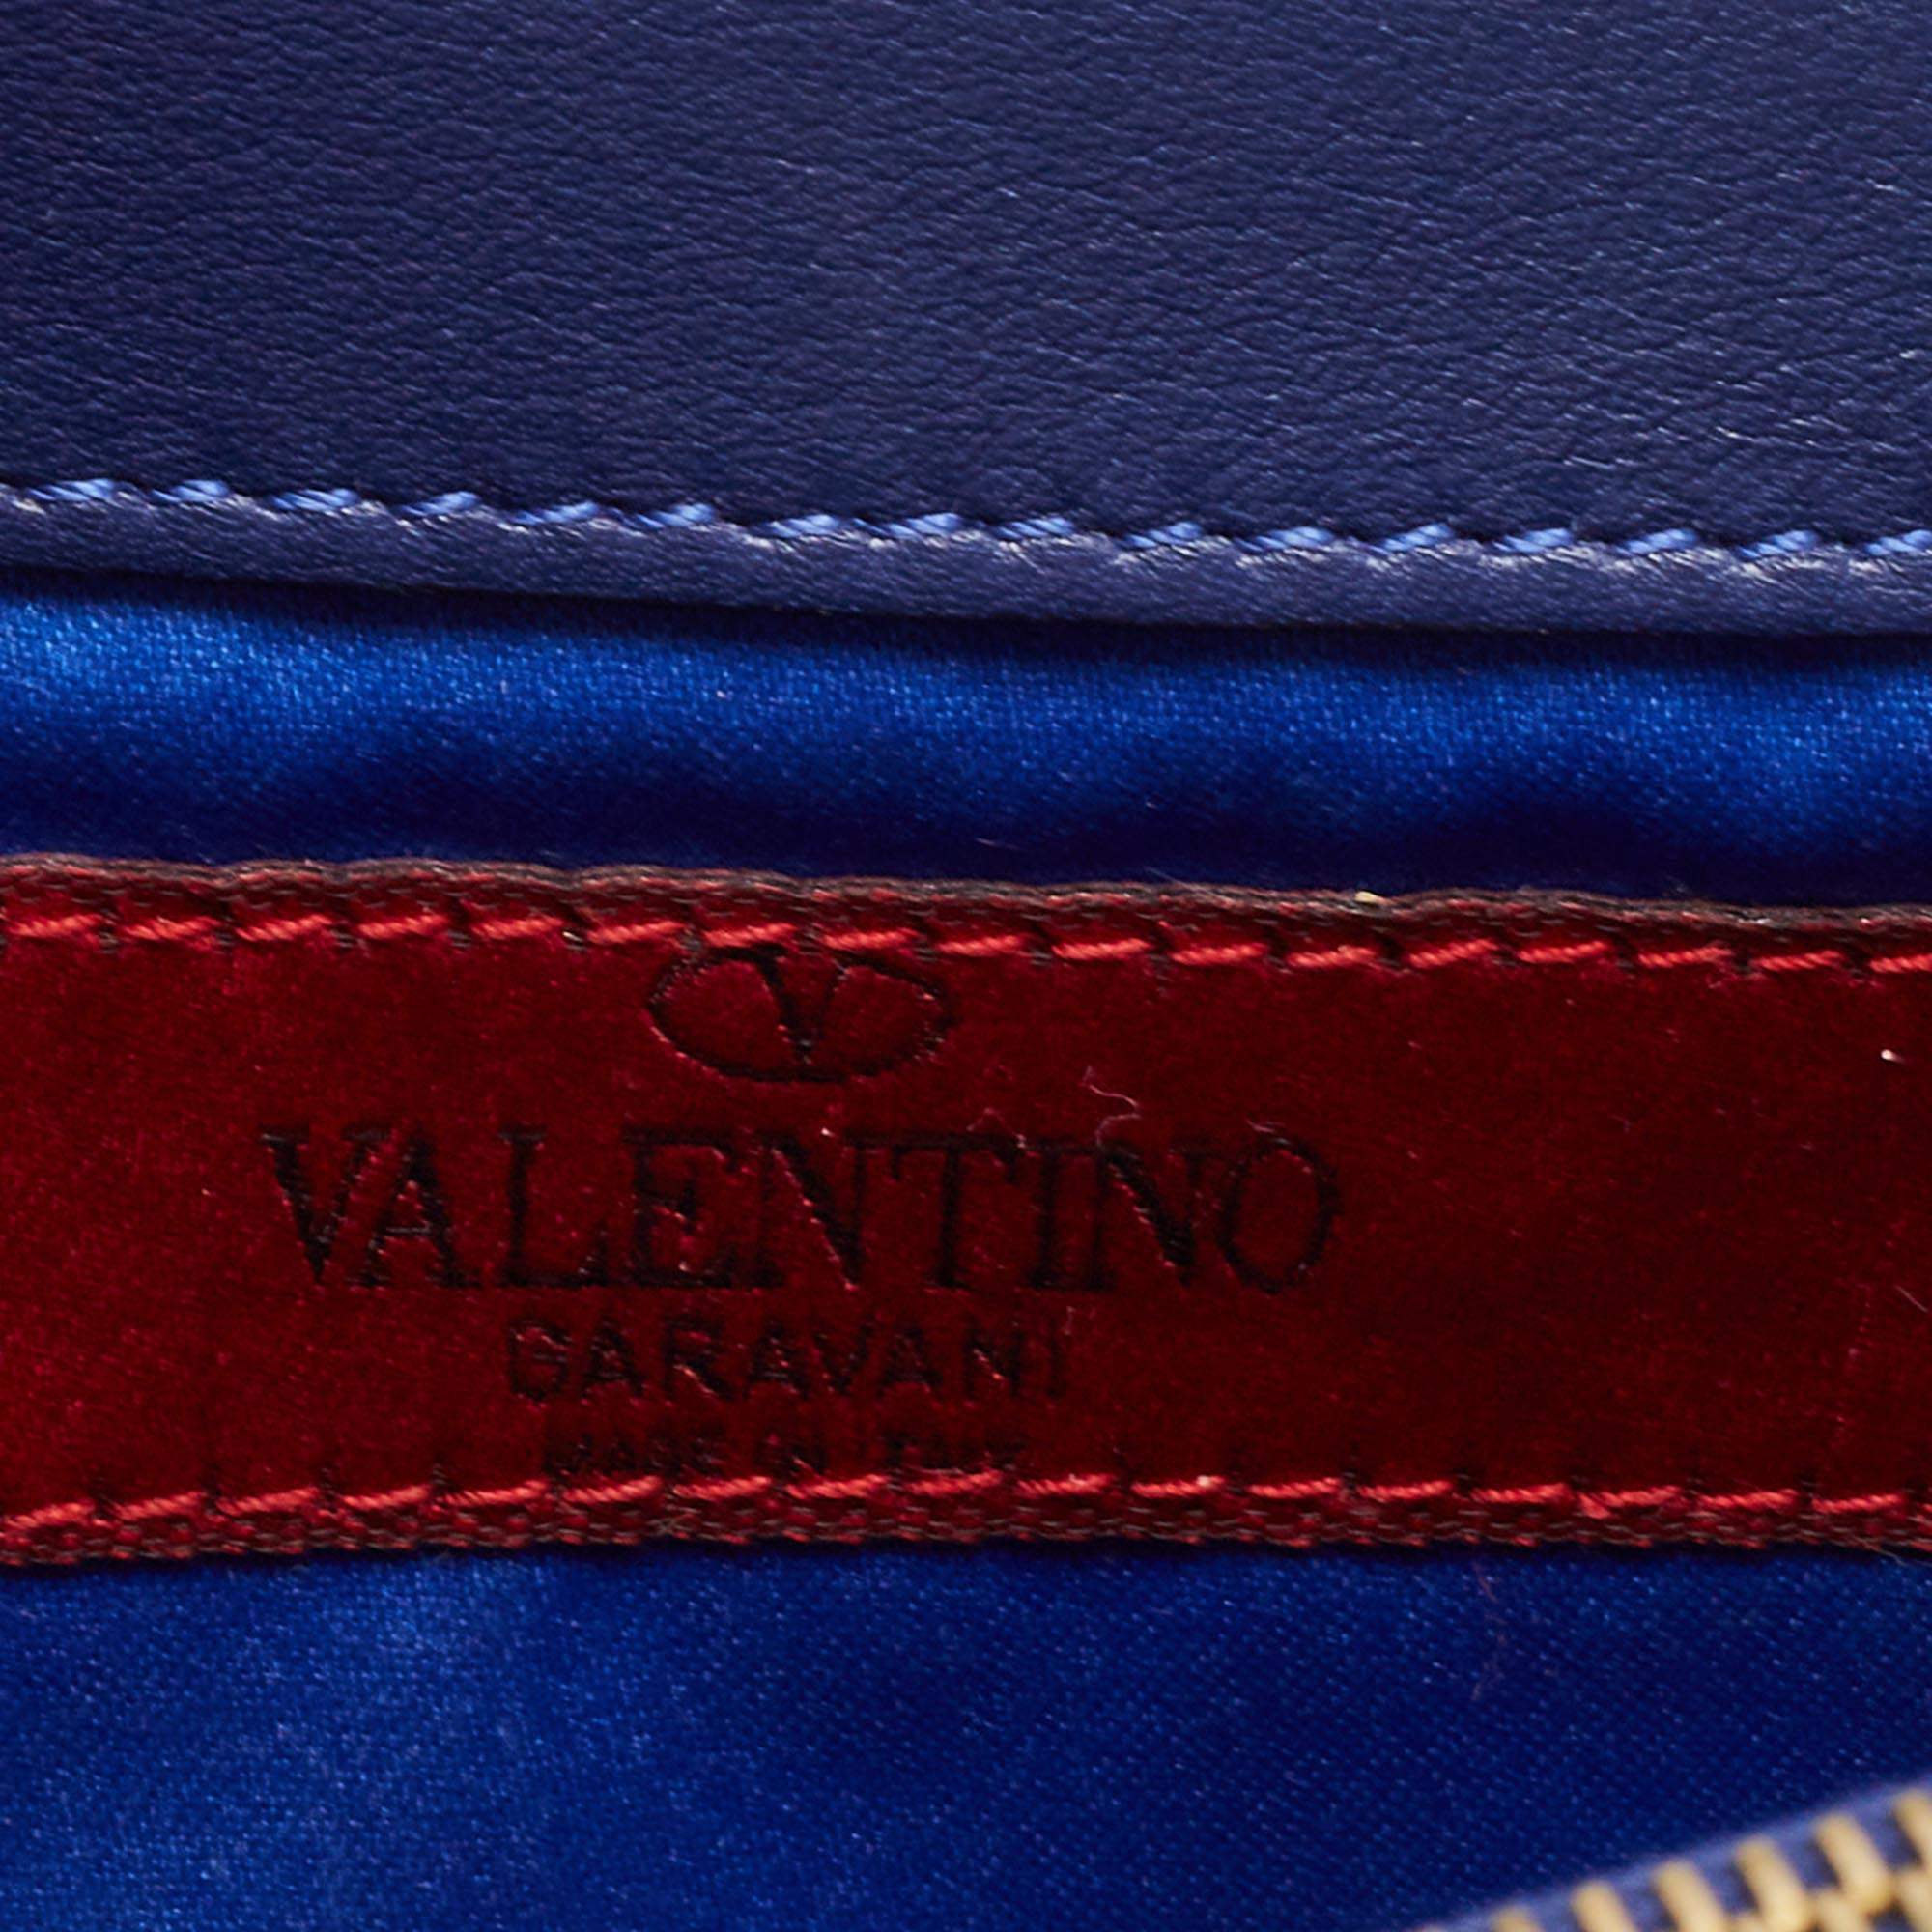 Valentino Garavani Rockstud Blue Calf Leather Small Chain Crossbody Cl –  Queen Bee of Beverly Hills